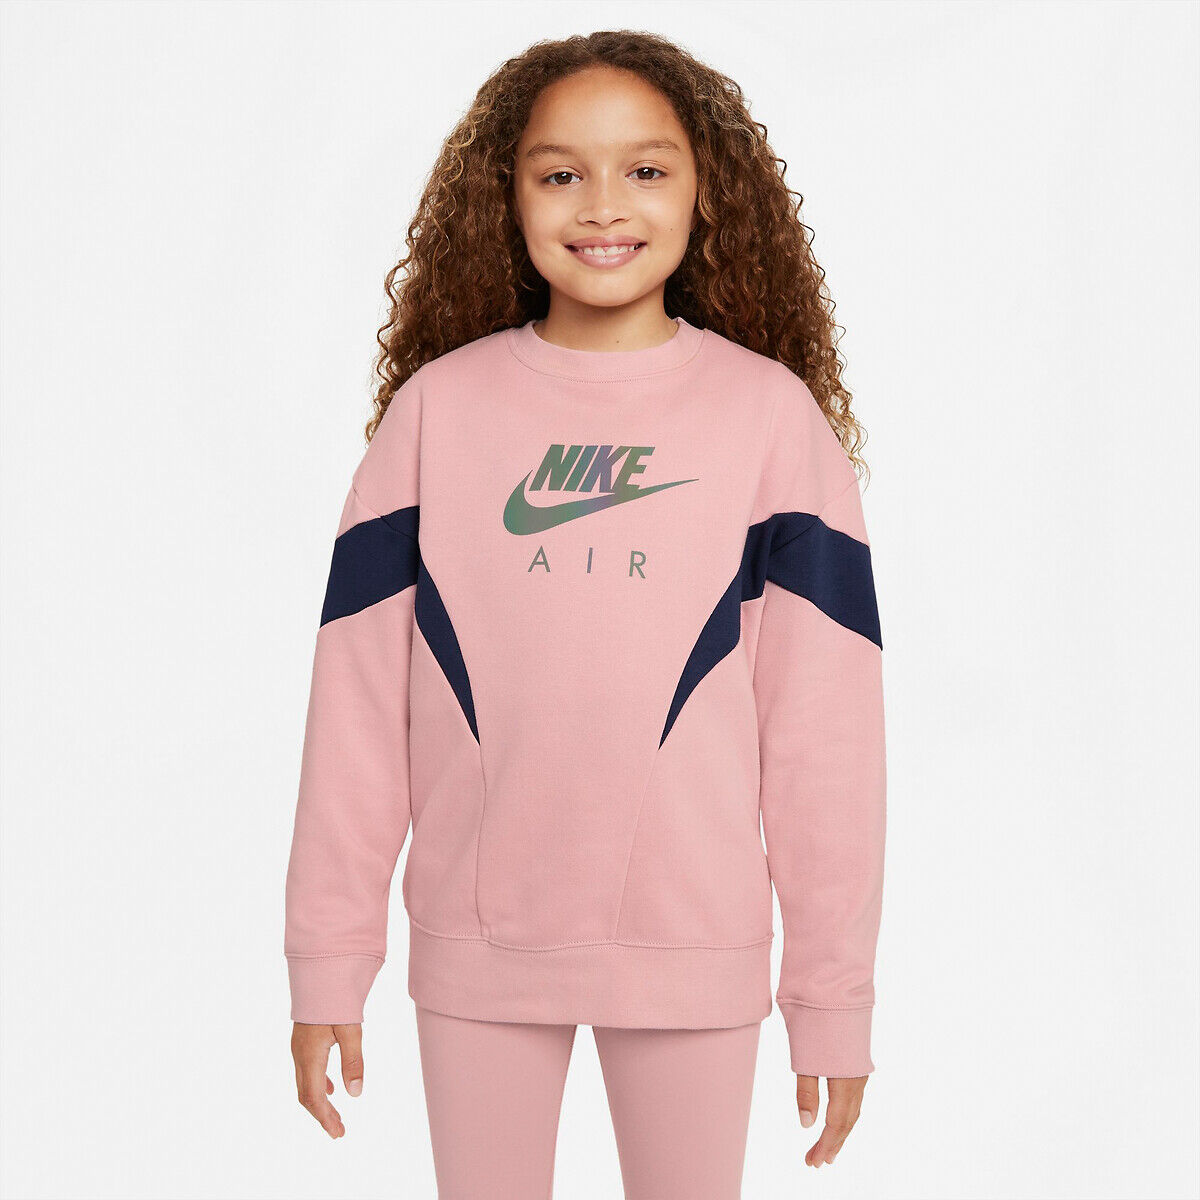 NIKE Weites Sweatshirt Nike Air, 7-15 Jahre ROSA